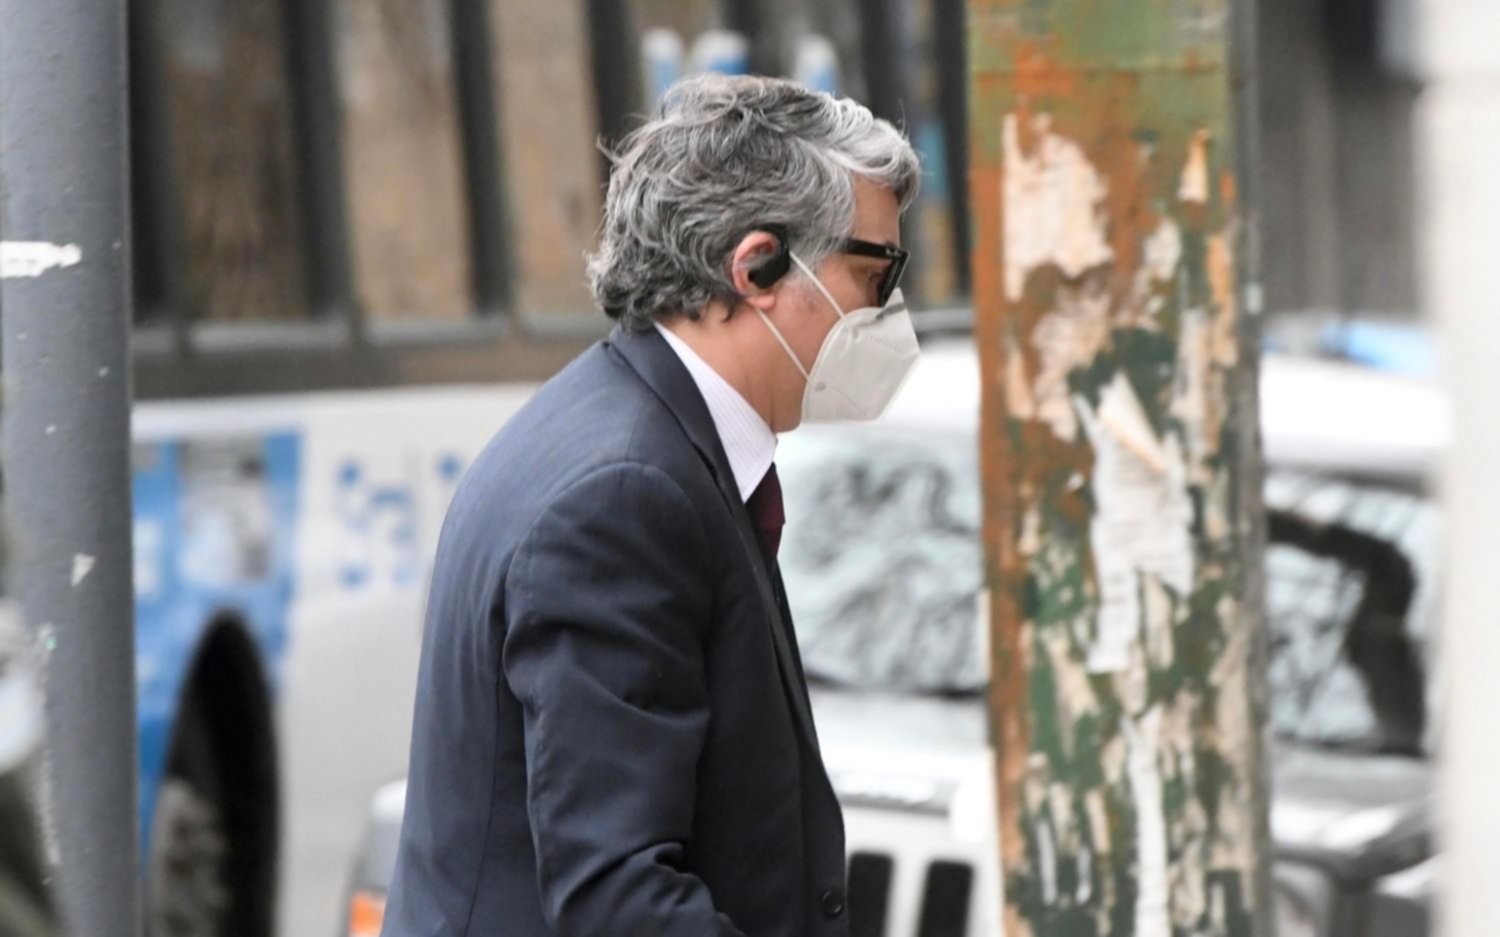 Presunto espionaje ilegal: declara la ex funcionaria cercana a Macri